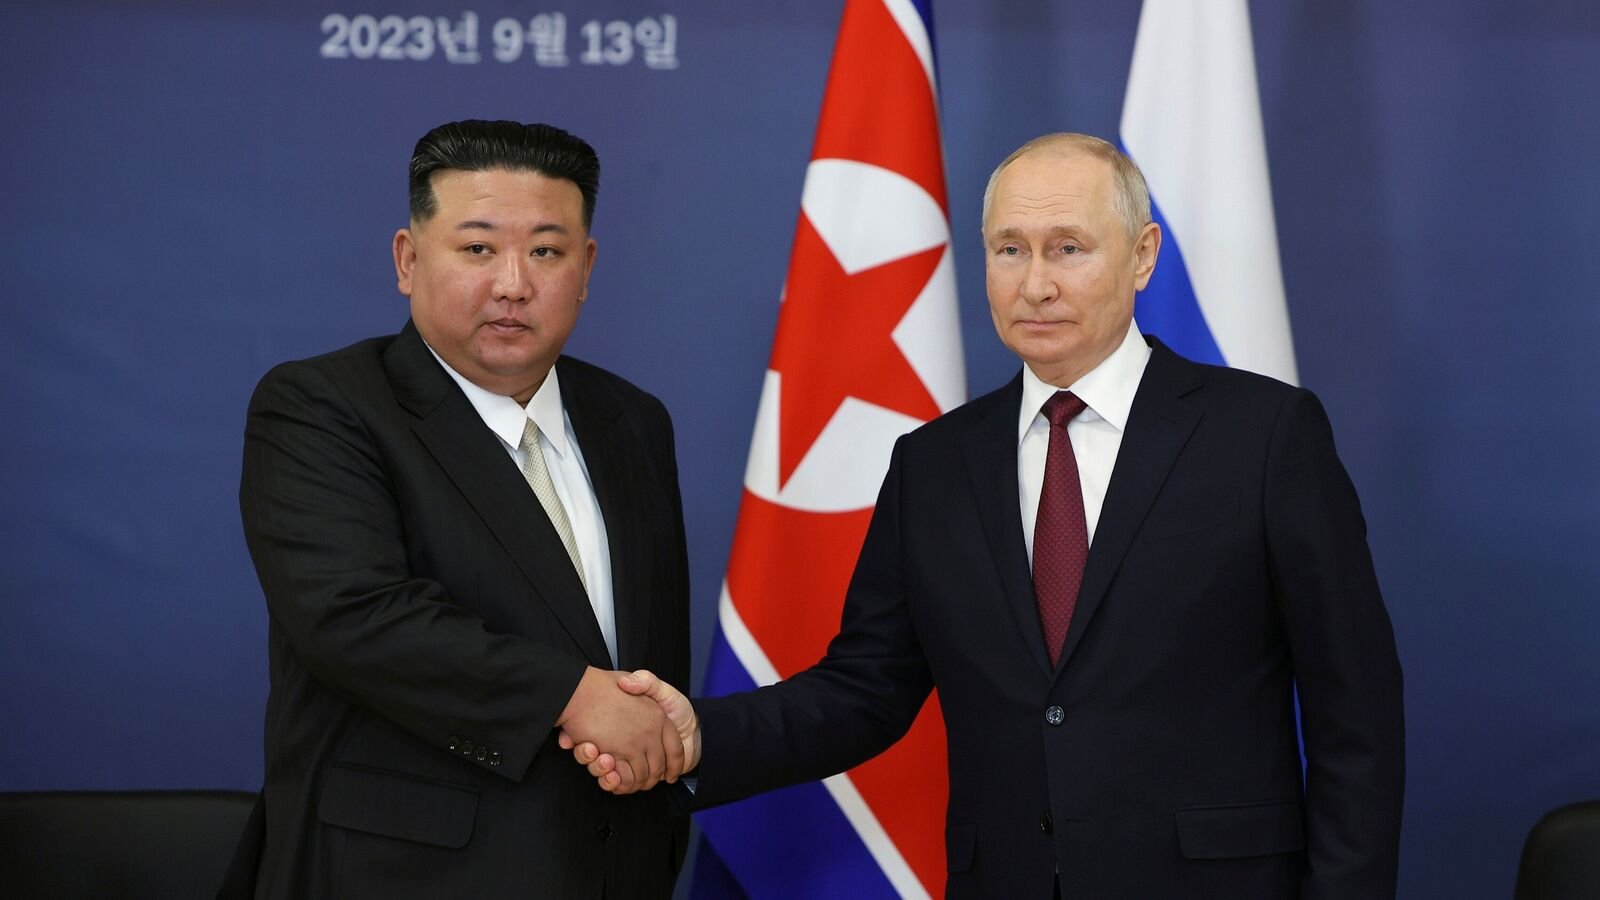 Vladimir Putin’s dangerous bromance with Kim Jong Un